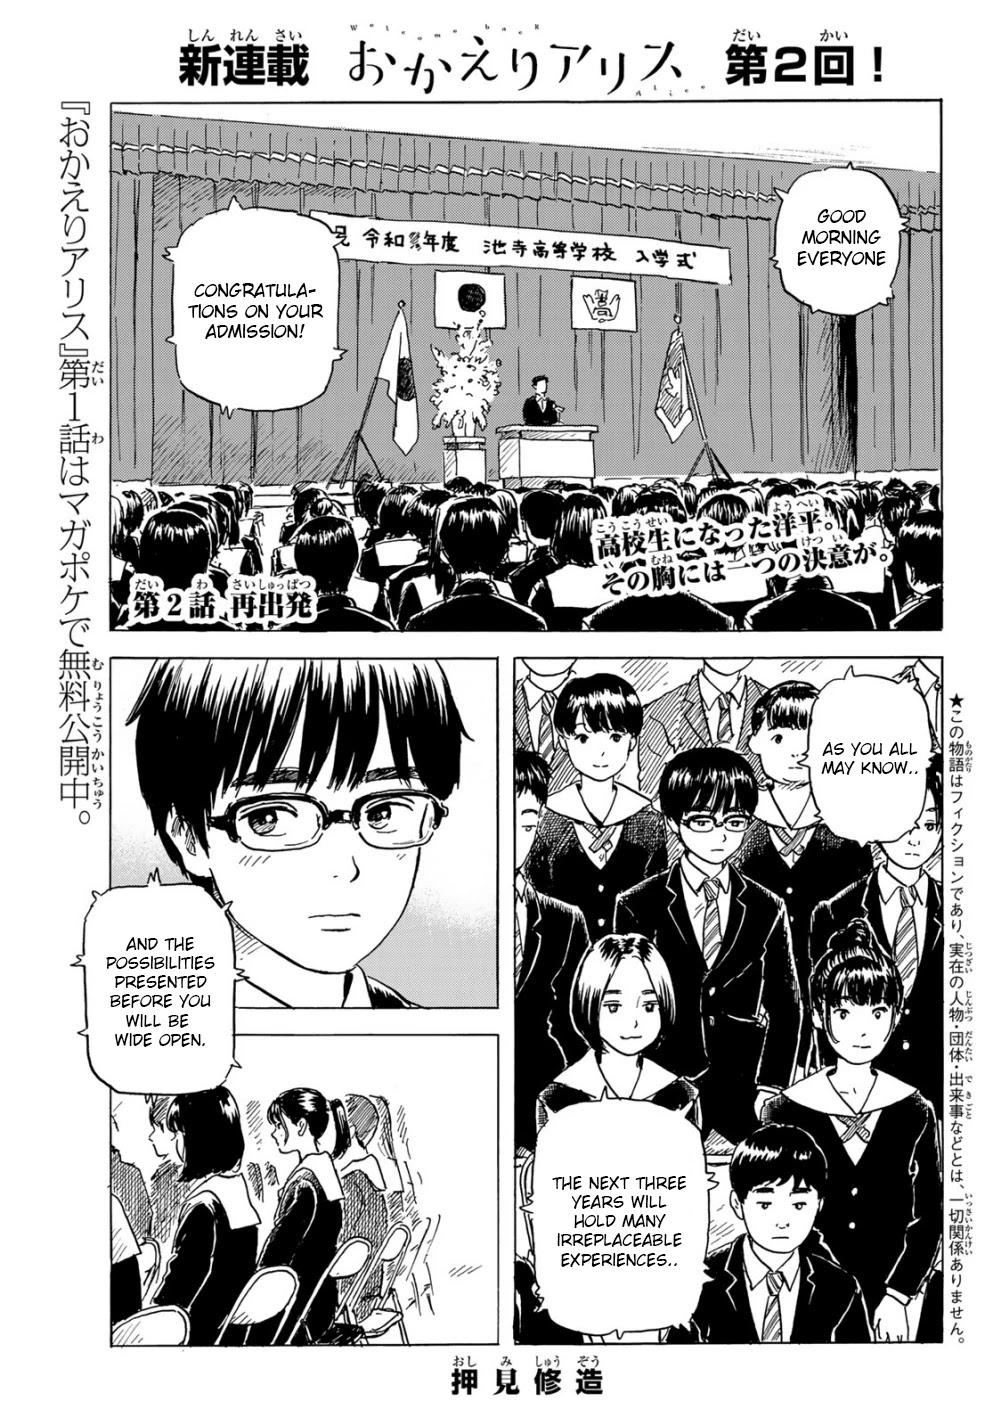 Read Okaeri Alice Chapter 2 Manga Online For Free Kissmangas Com